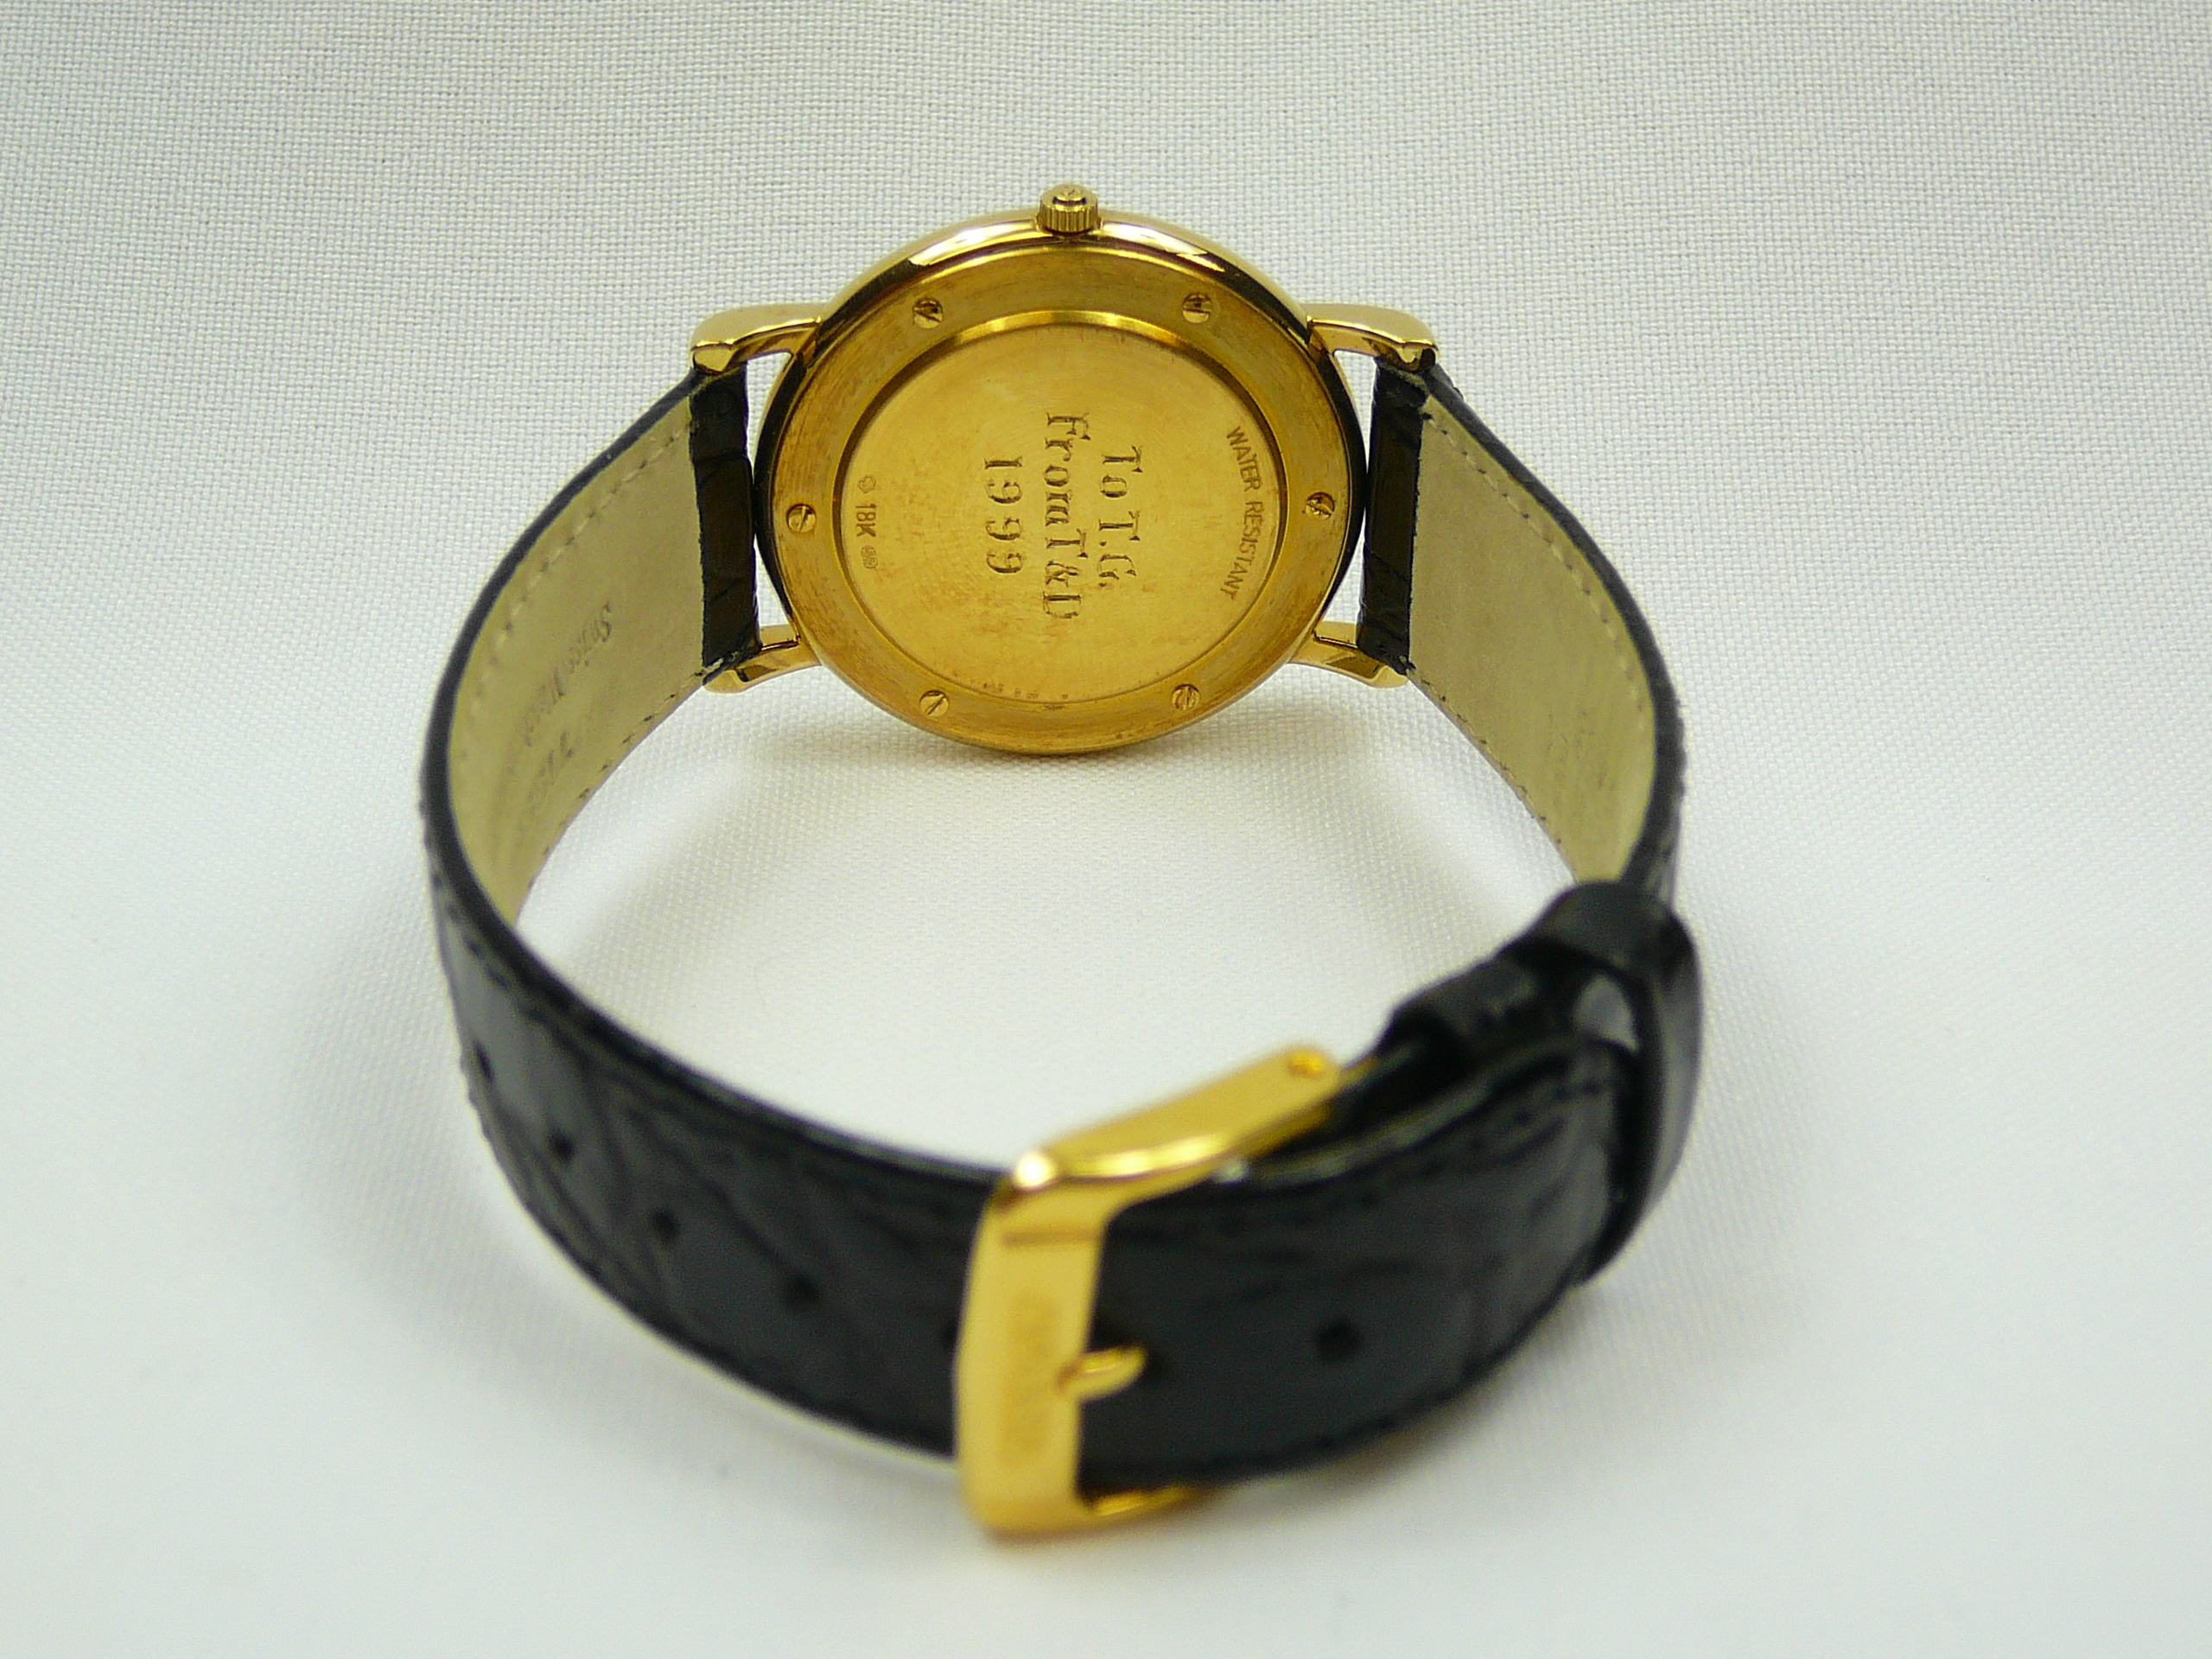 Gents Gold Tissot Wrist Watch - Image 4 of 5